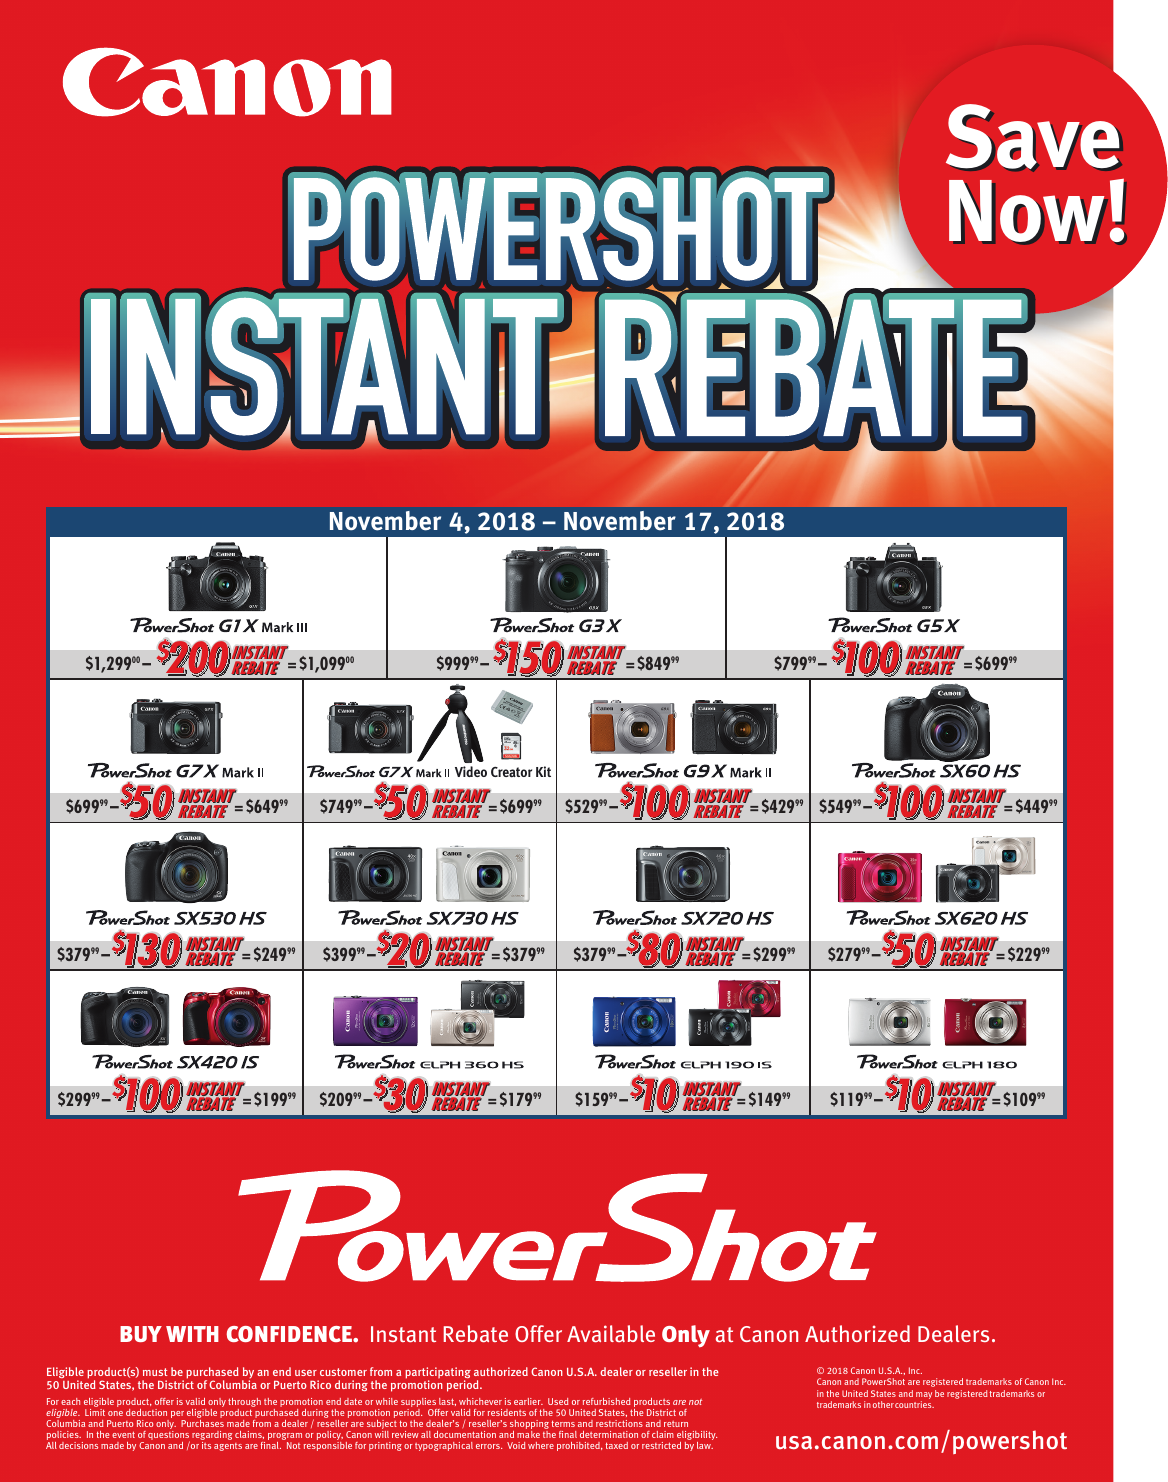 Canon Power Shot Instant Rebate Powershot Promotion 110418 111718